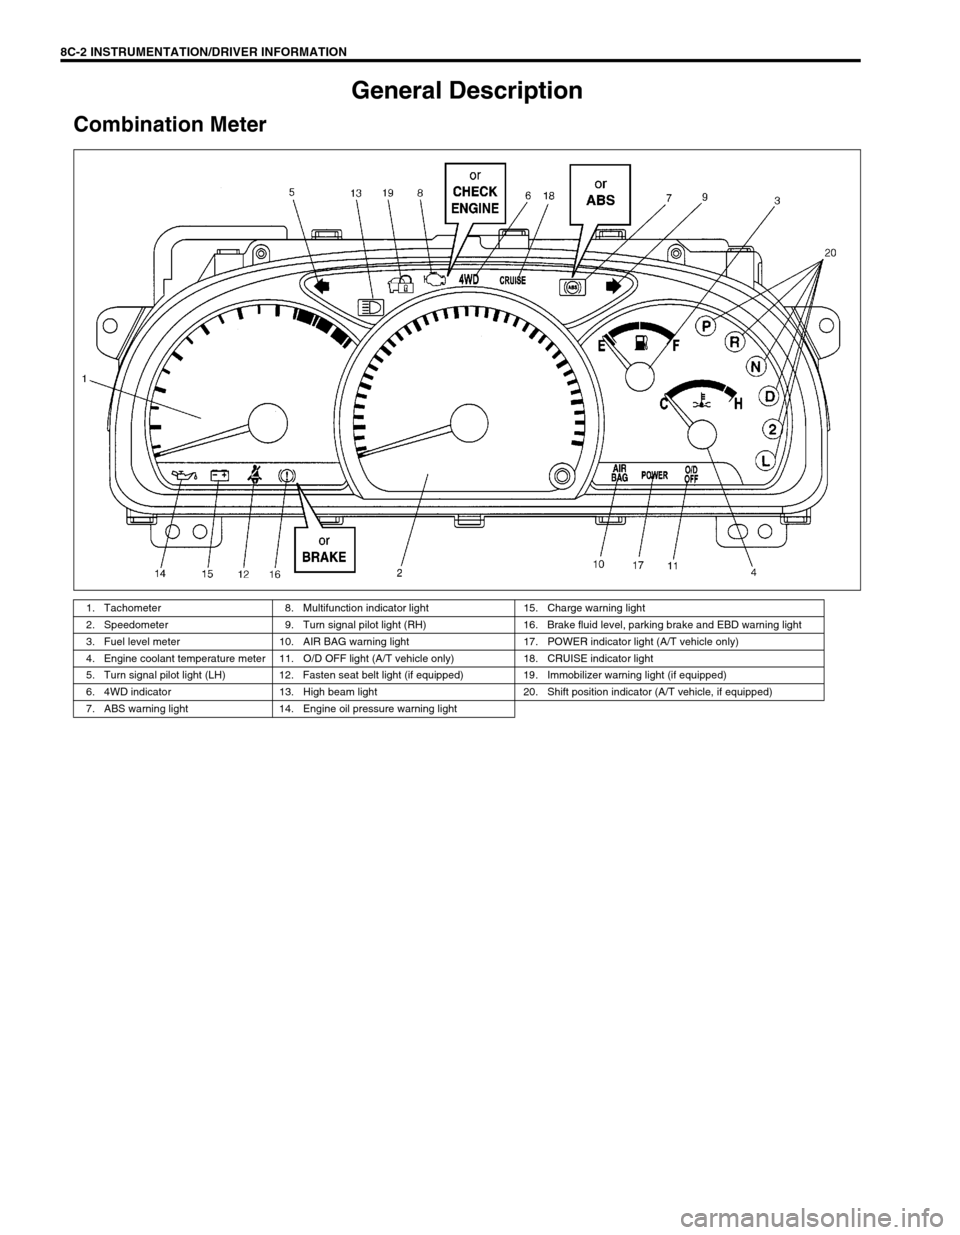 SUZUKI GRAND VITARA 1999 2.G Owners Manual 8C-2 INSTRUMENTATION/DRIVER INFORMATION
General Description
Combination Meter
1. Tachometer 8. Multifunction indicator light 15. Charge warning light
2. Speedometer 9. Turn signal pilot light (RH) 16.